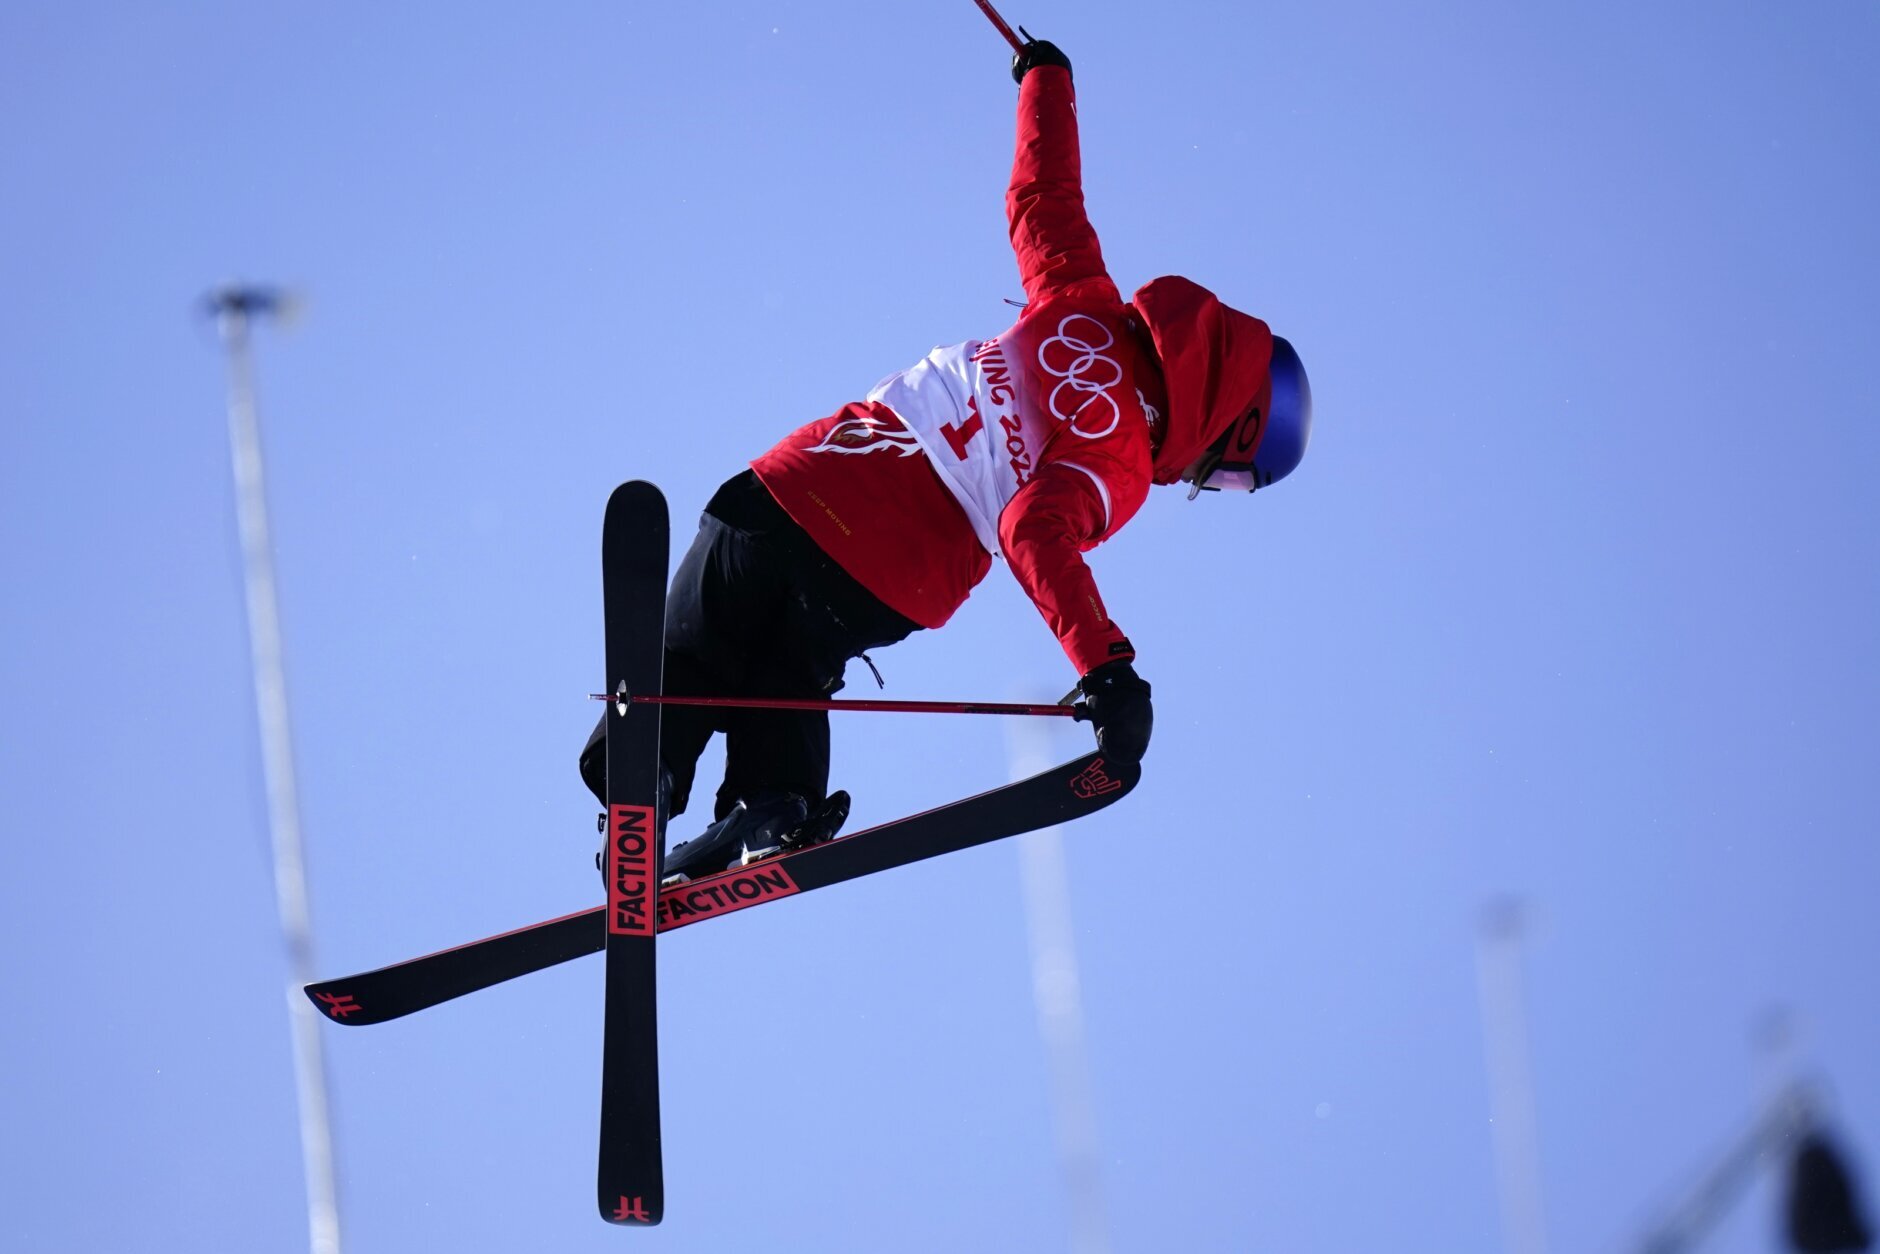 Eileen Gu: Who is the California-born superstar freestyle skier